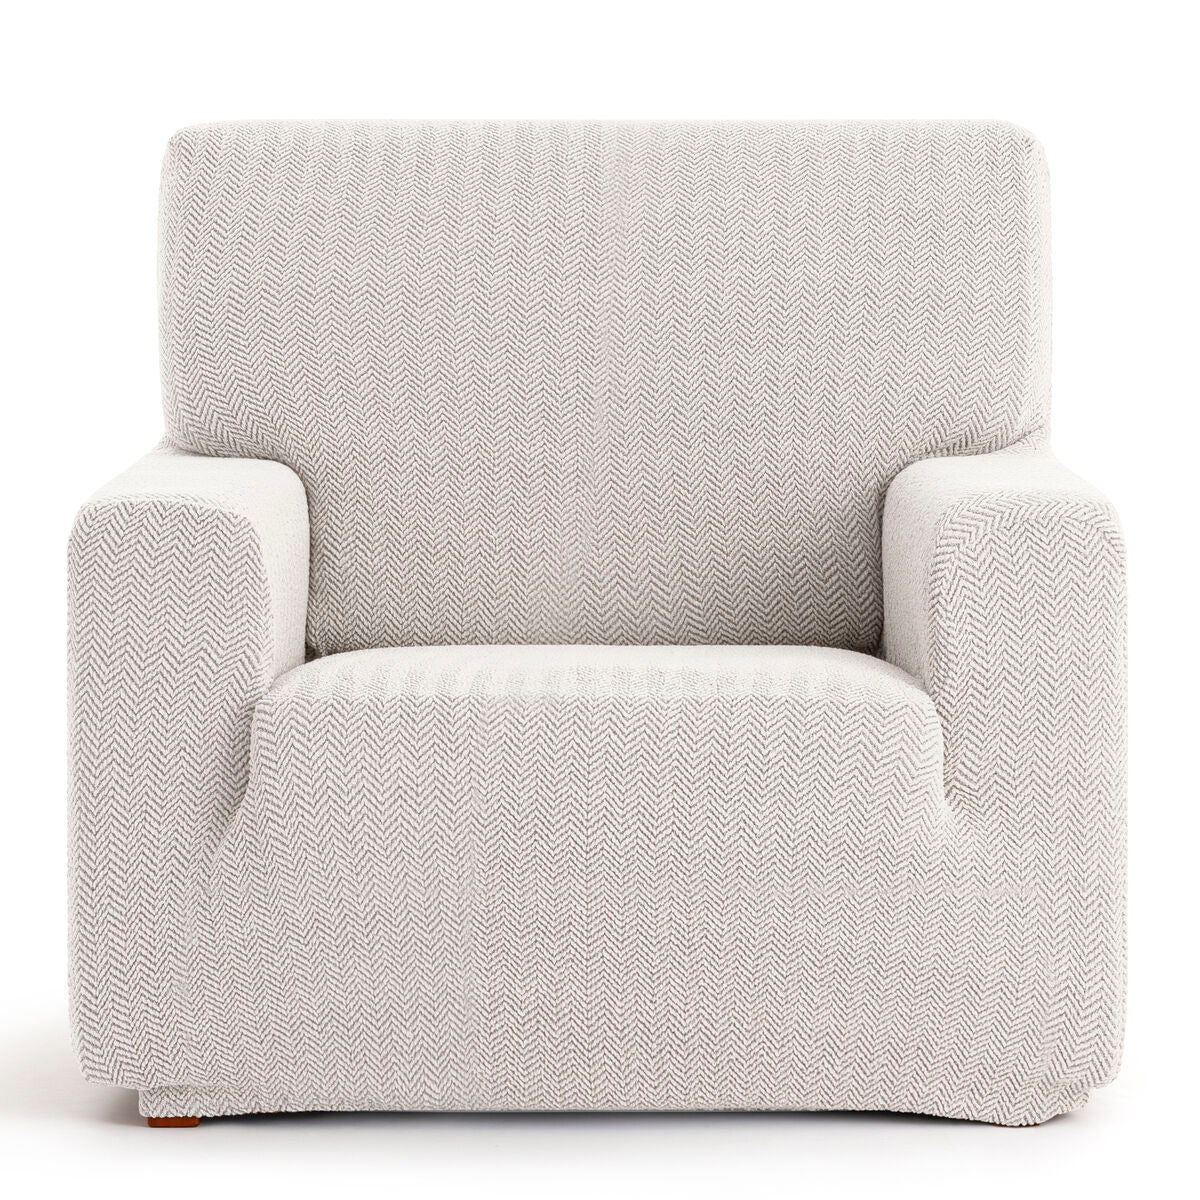 Eysa jaz sedia bianca 70 x 120 x 130 cm